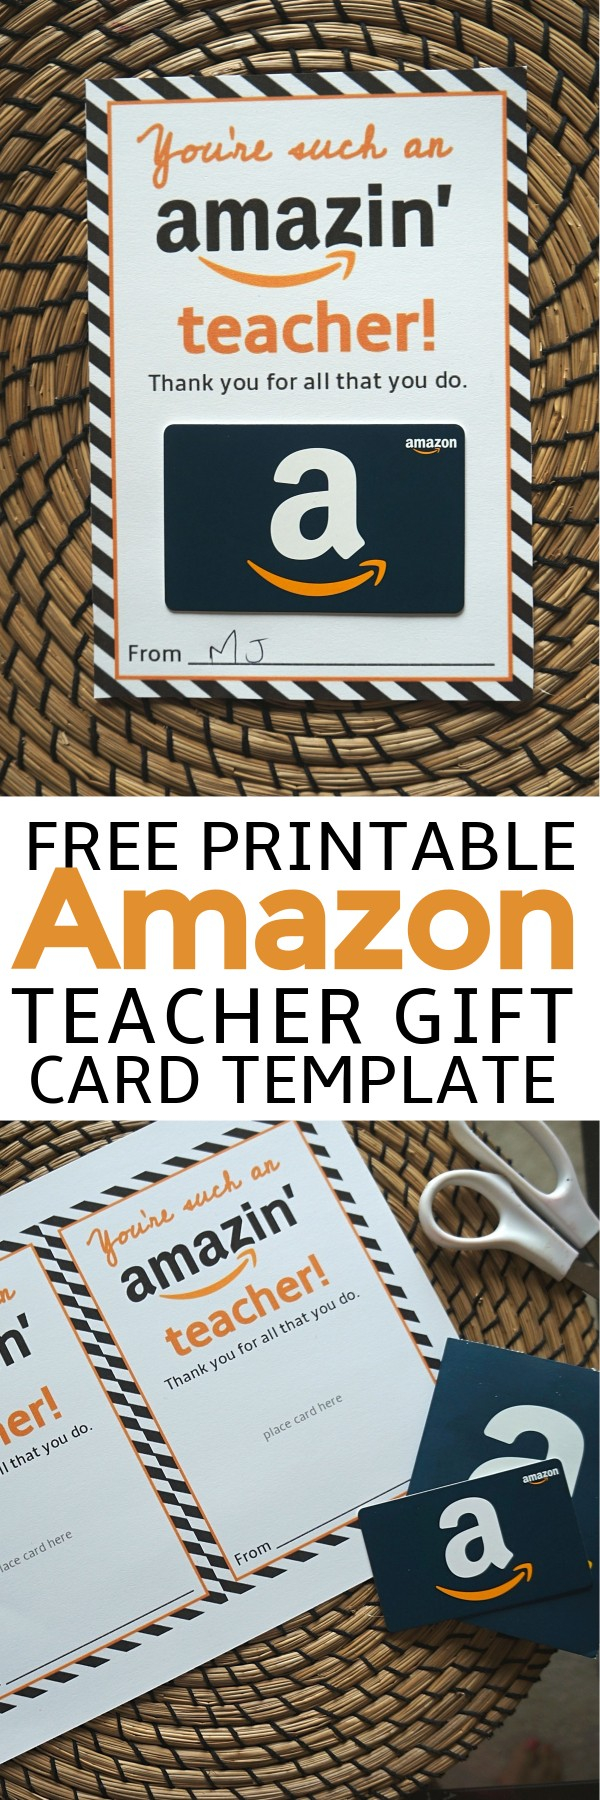 Free Amazon Teacher Gift Card Printable Template Give Gift Of Amazon